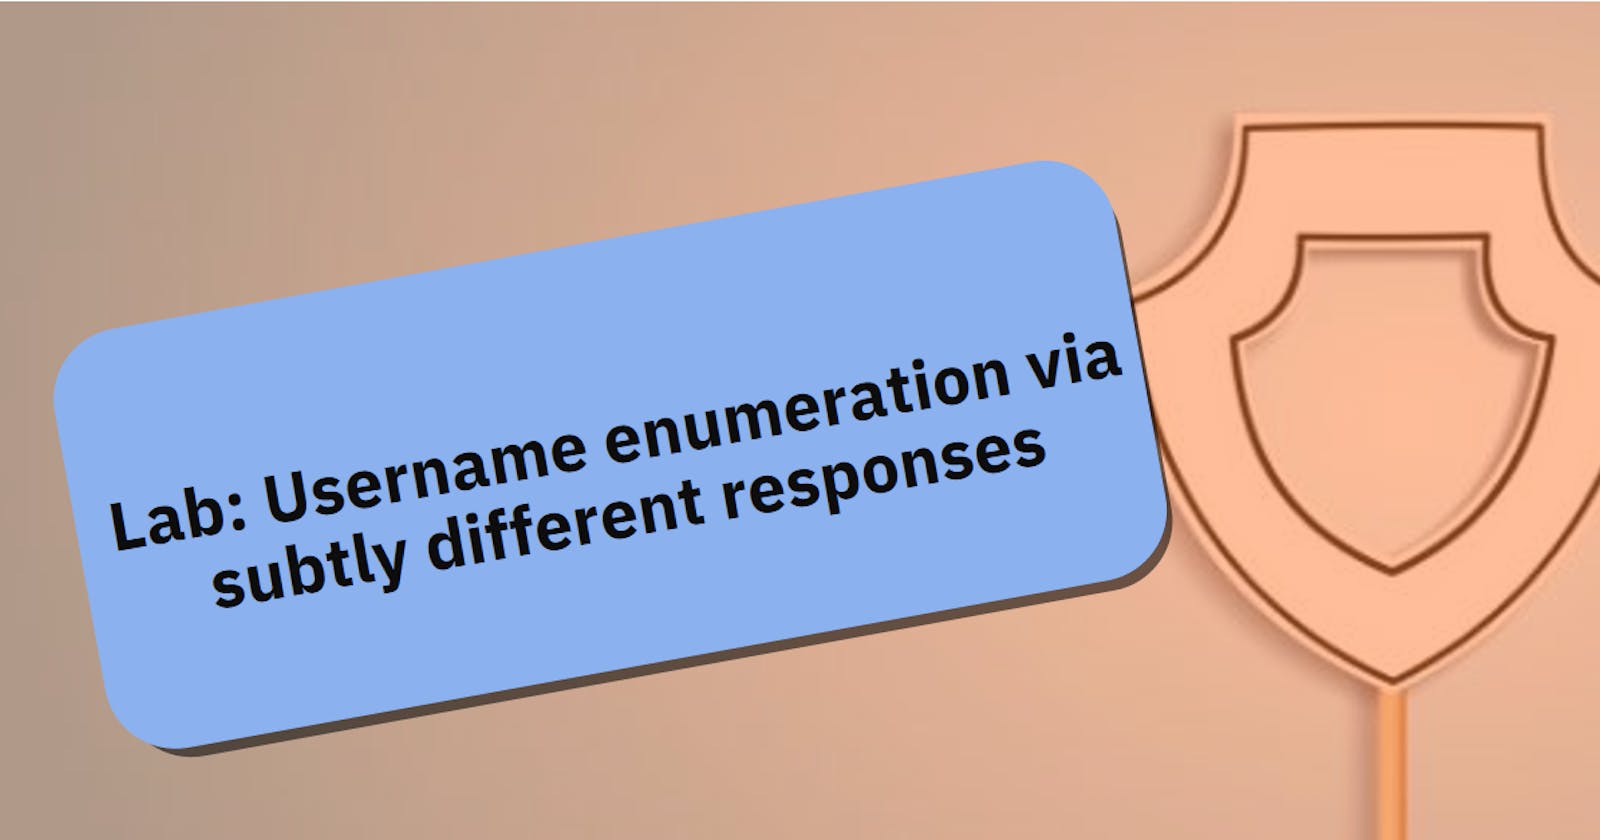 Lab: Username enumeration via subtly different responses